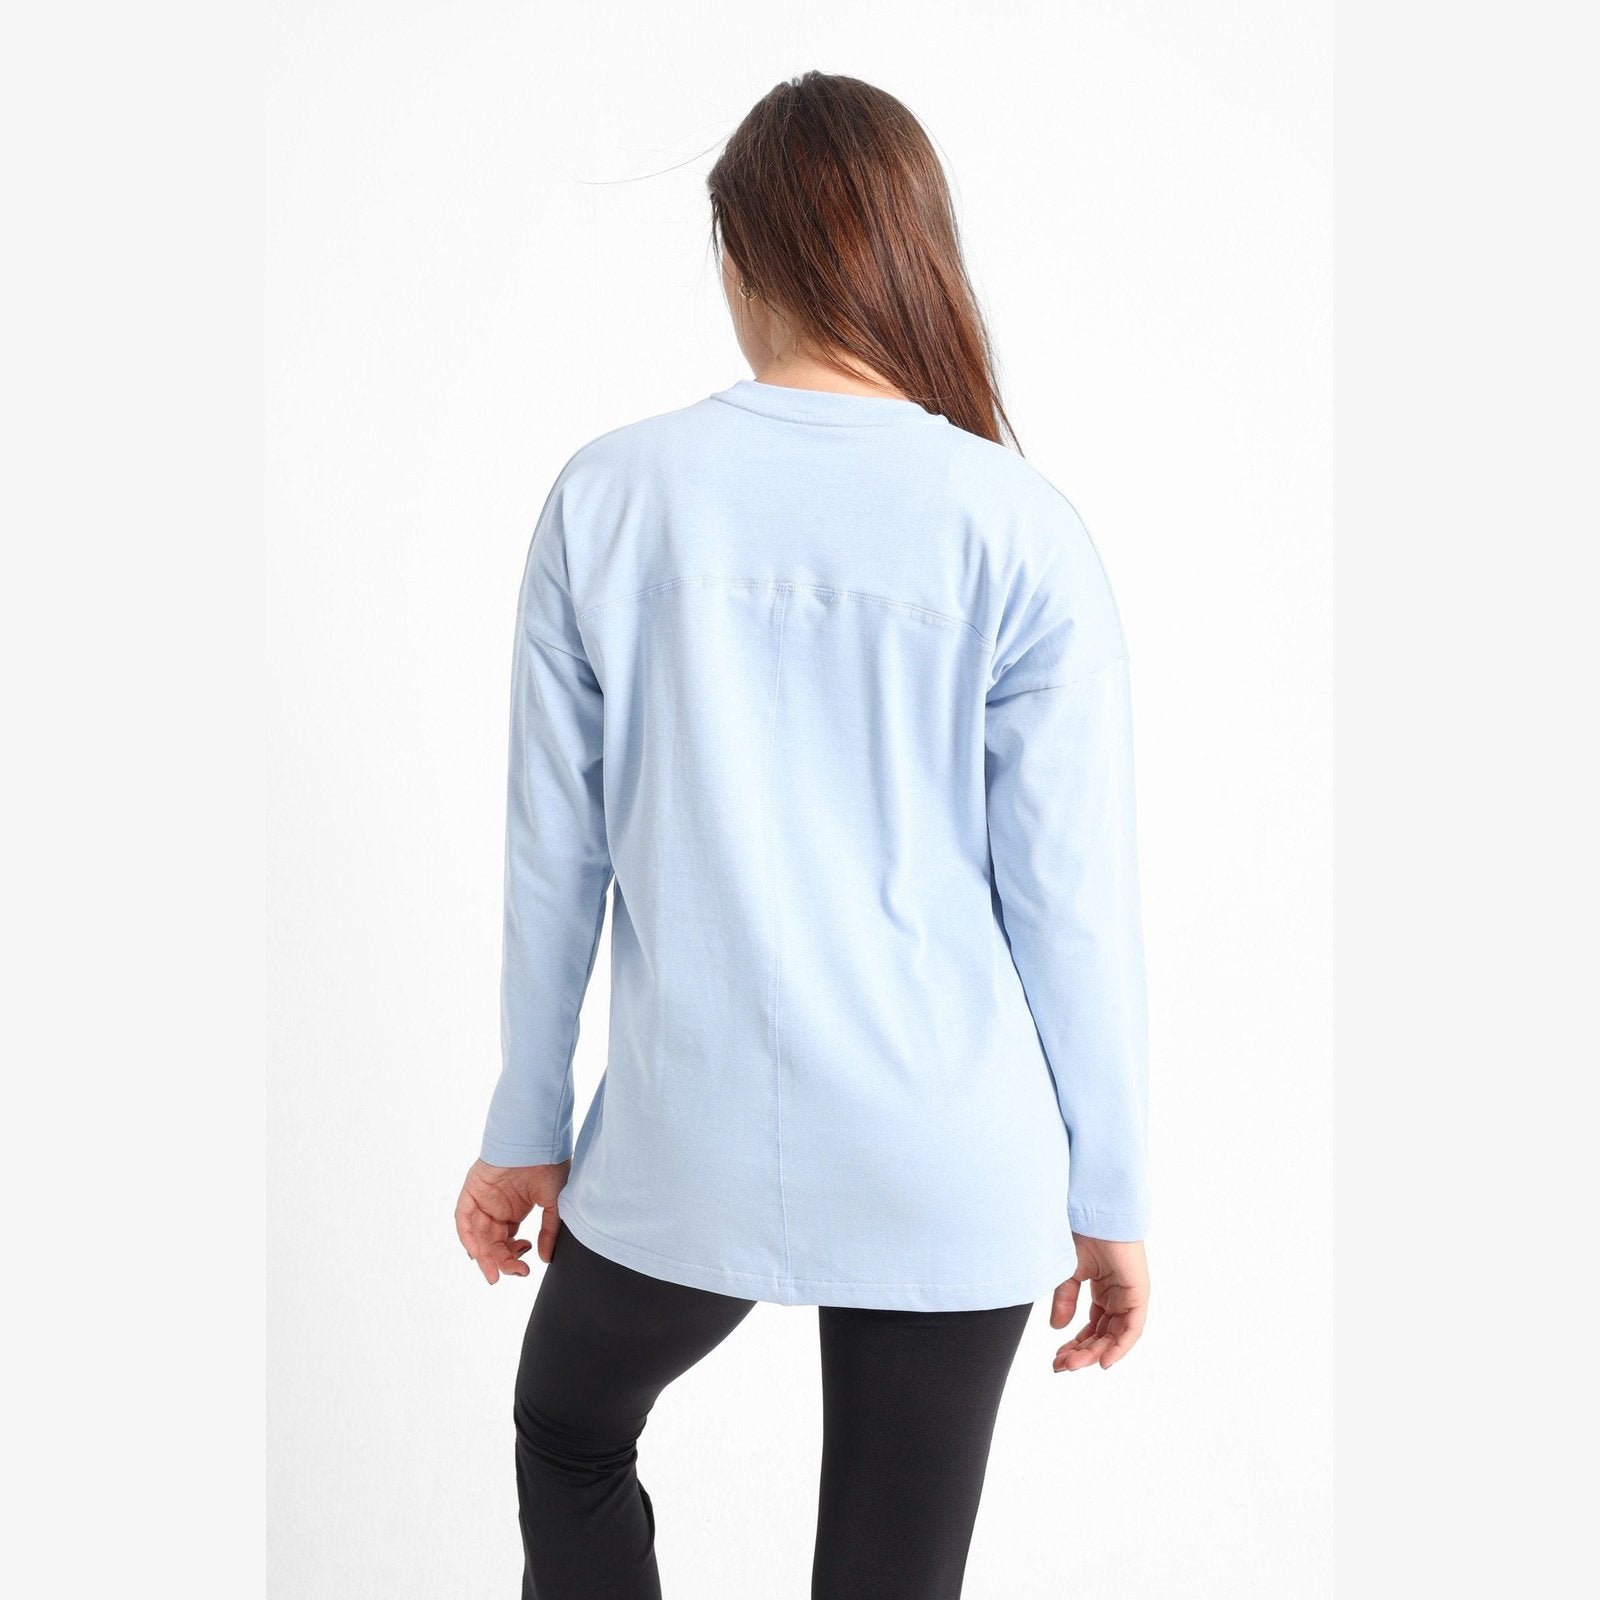 Oversized seam t-shirt in pastel blue